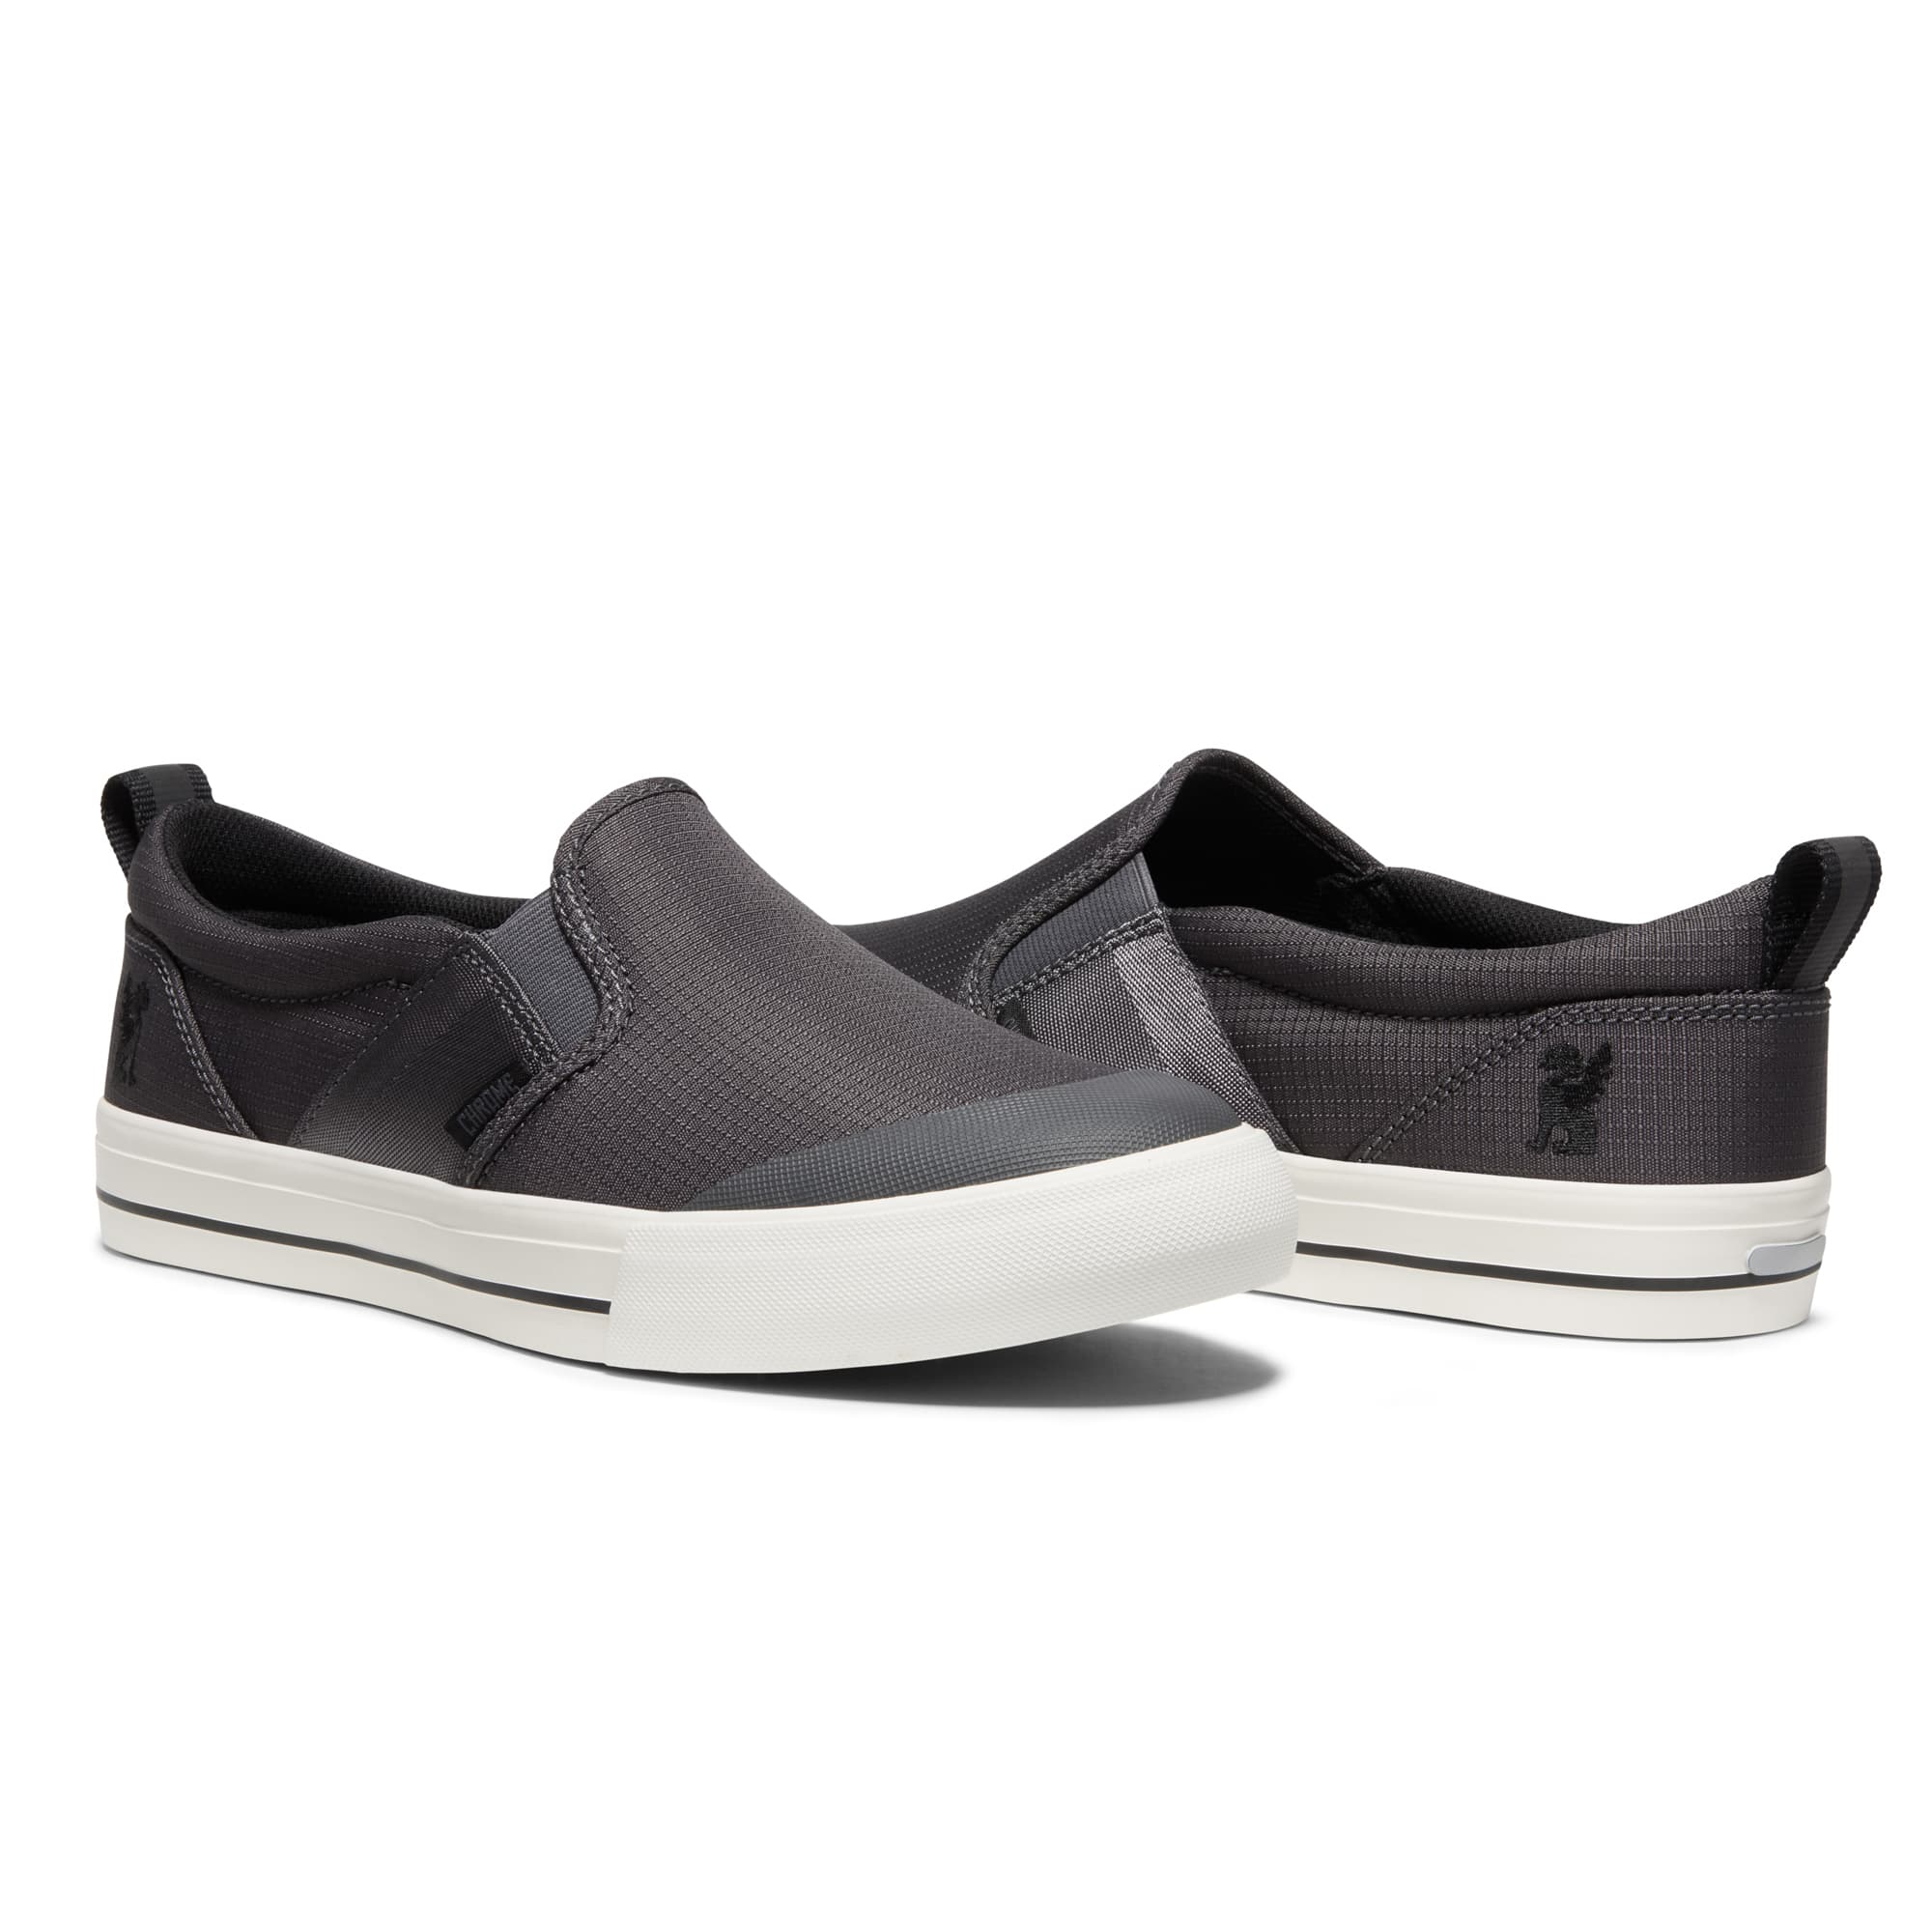 Dima 3.0 Slip-On Sneaker in grey side view #color_grey ripstop